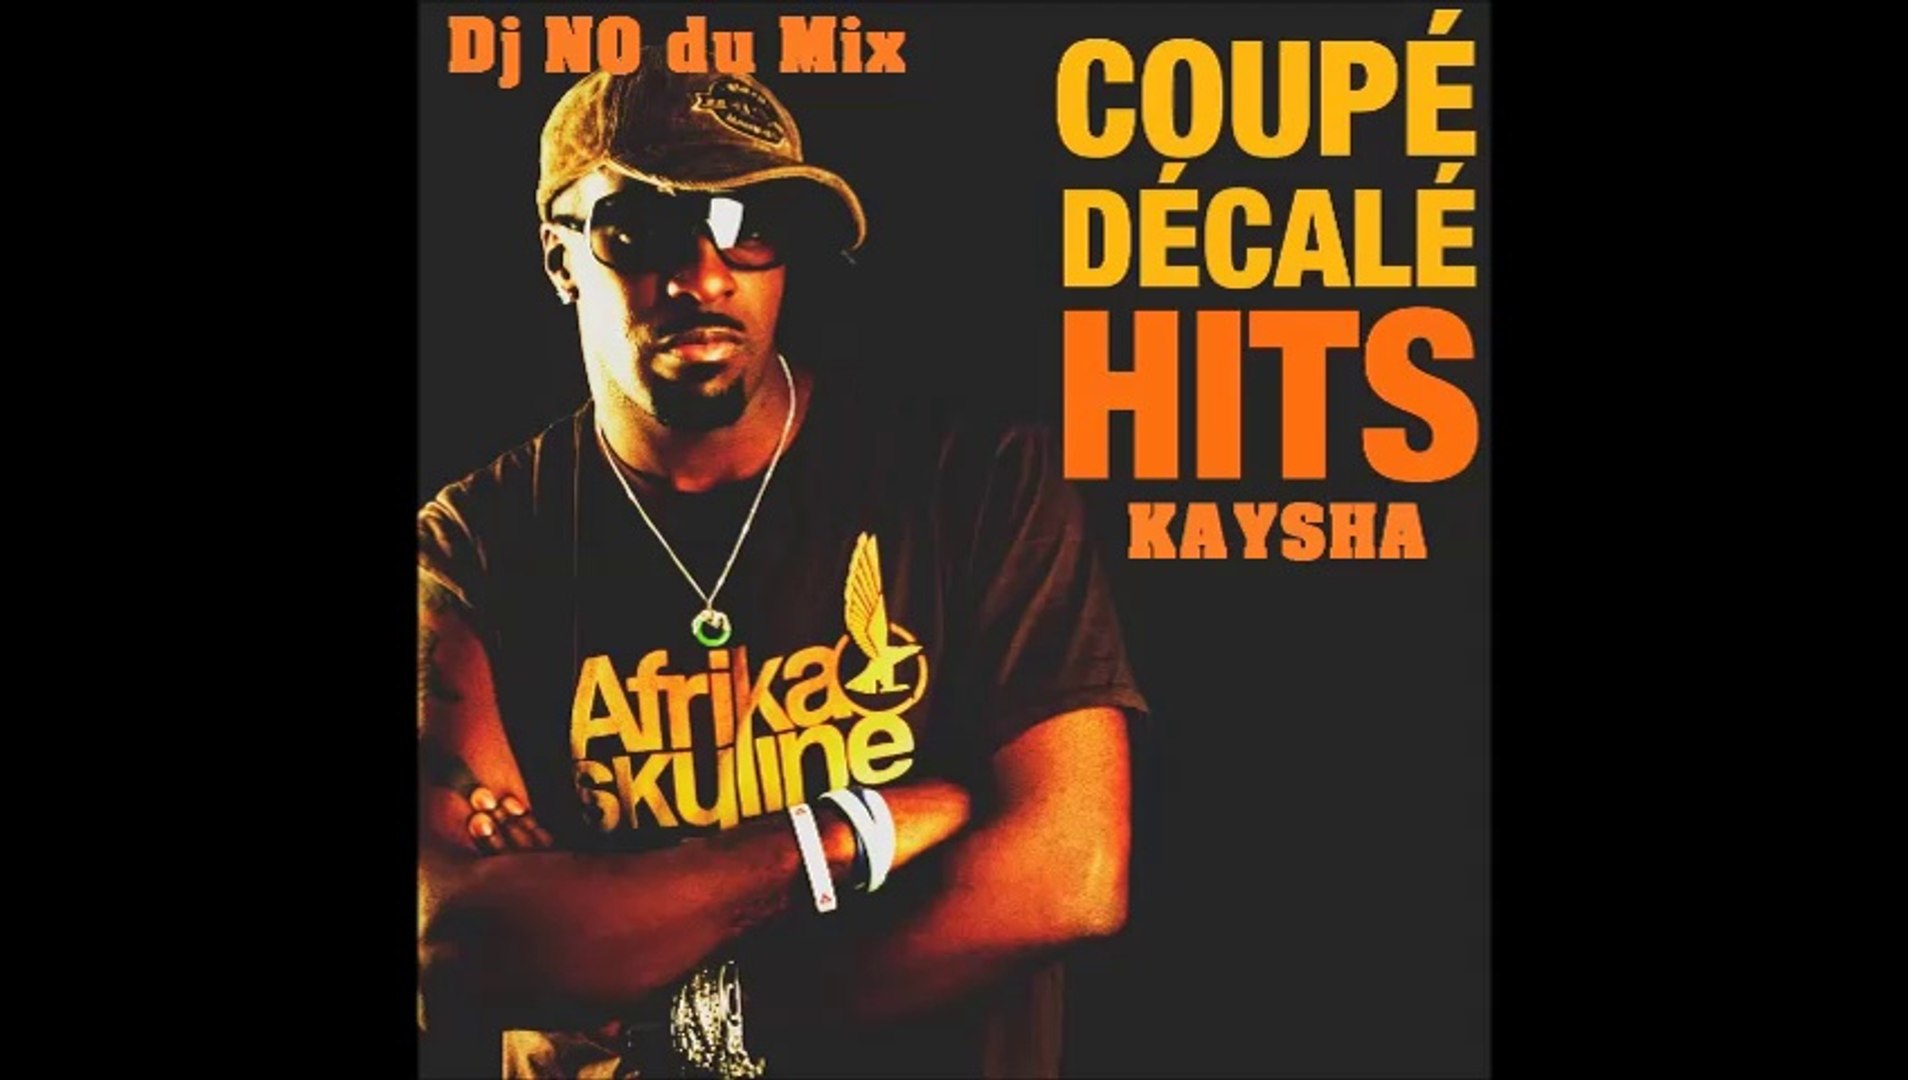 COUPE DECALE HITS KAYSHA prod by Dj NO du Mix - Vidéo Dailymotion